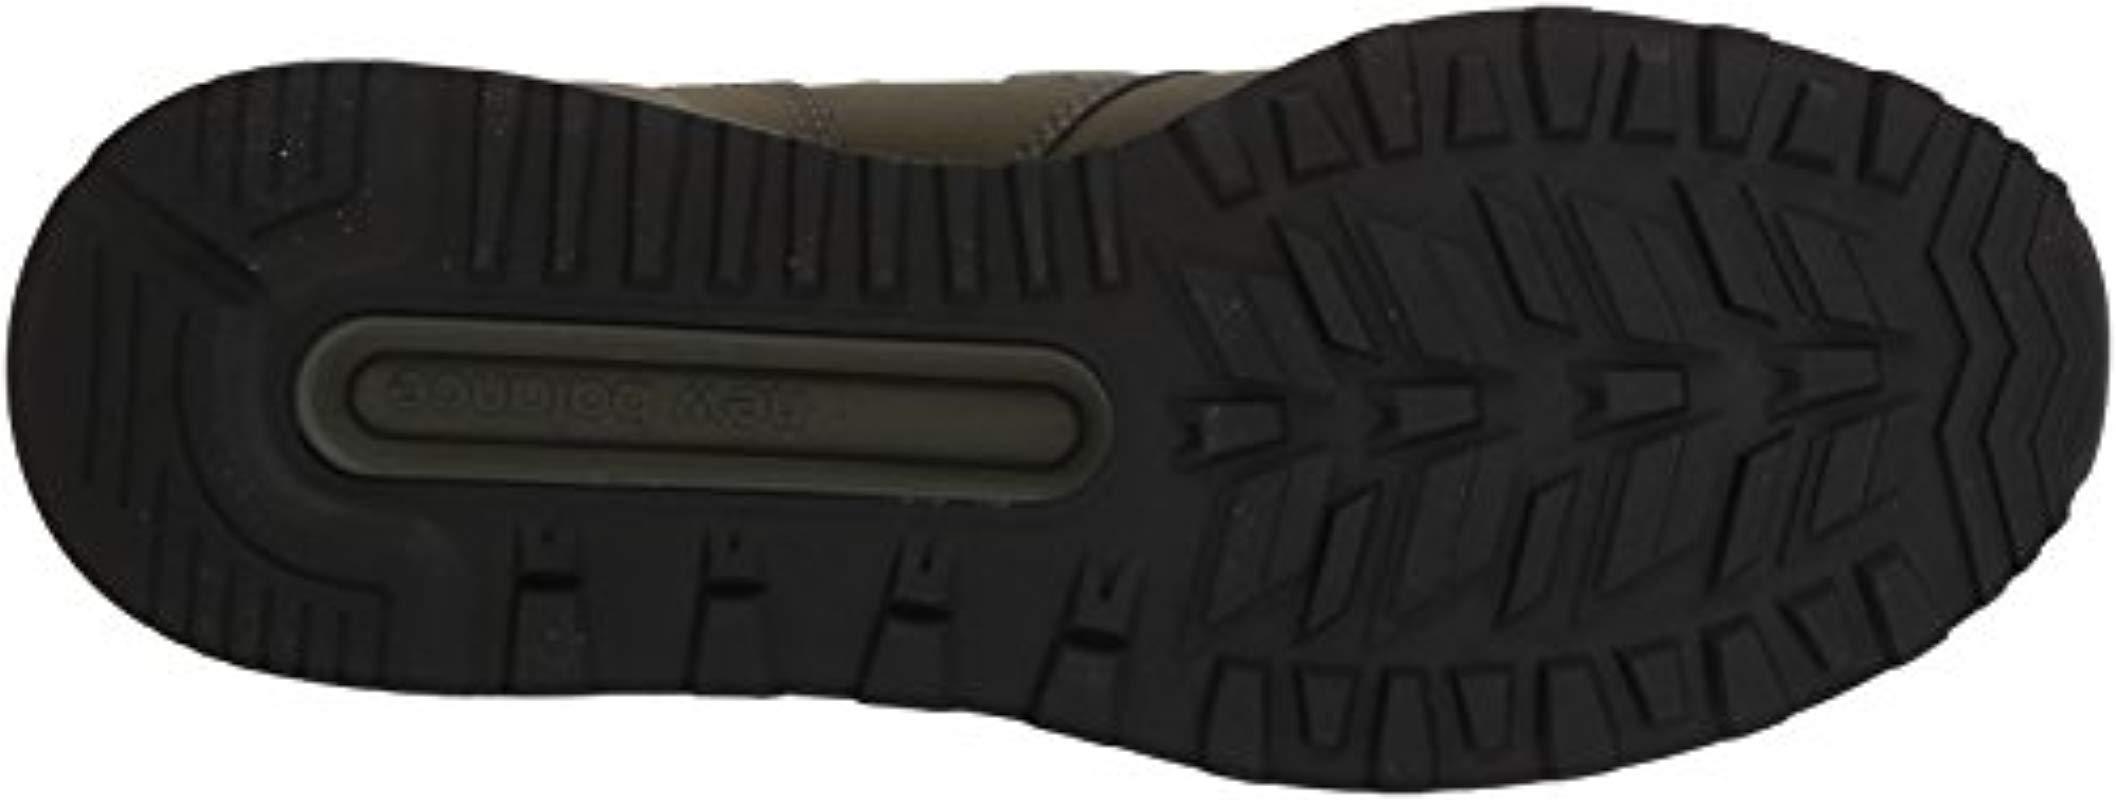 New Balance Fresh Foam 574 Sport V2 Sneaker in Army Olive/Green ...